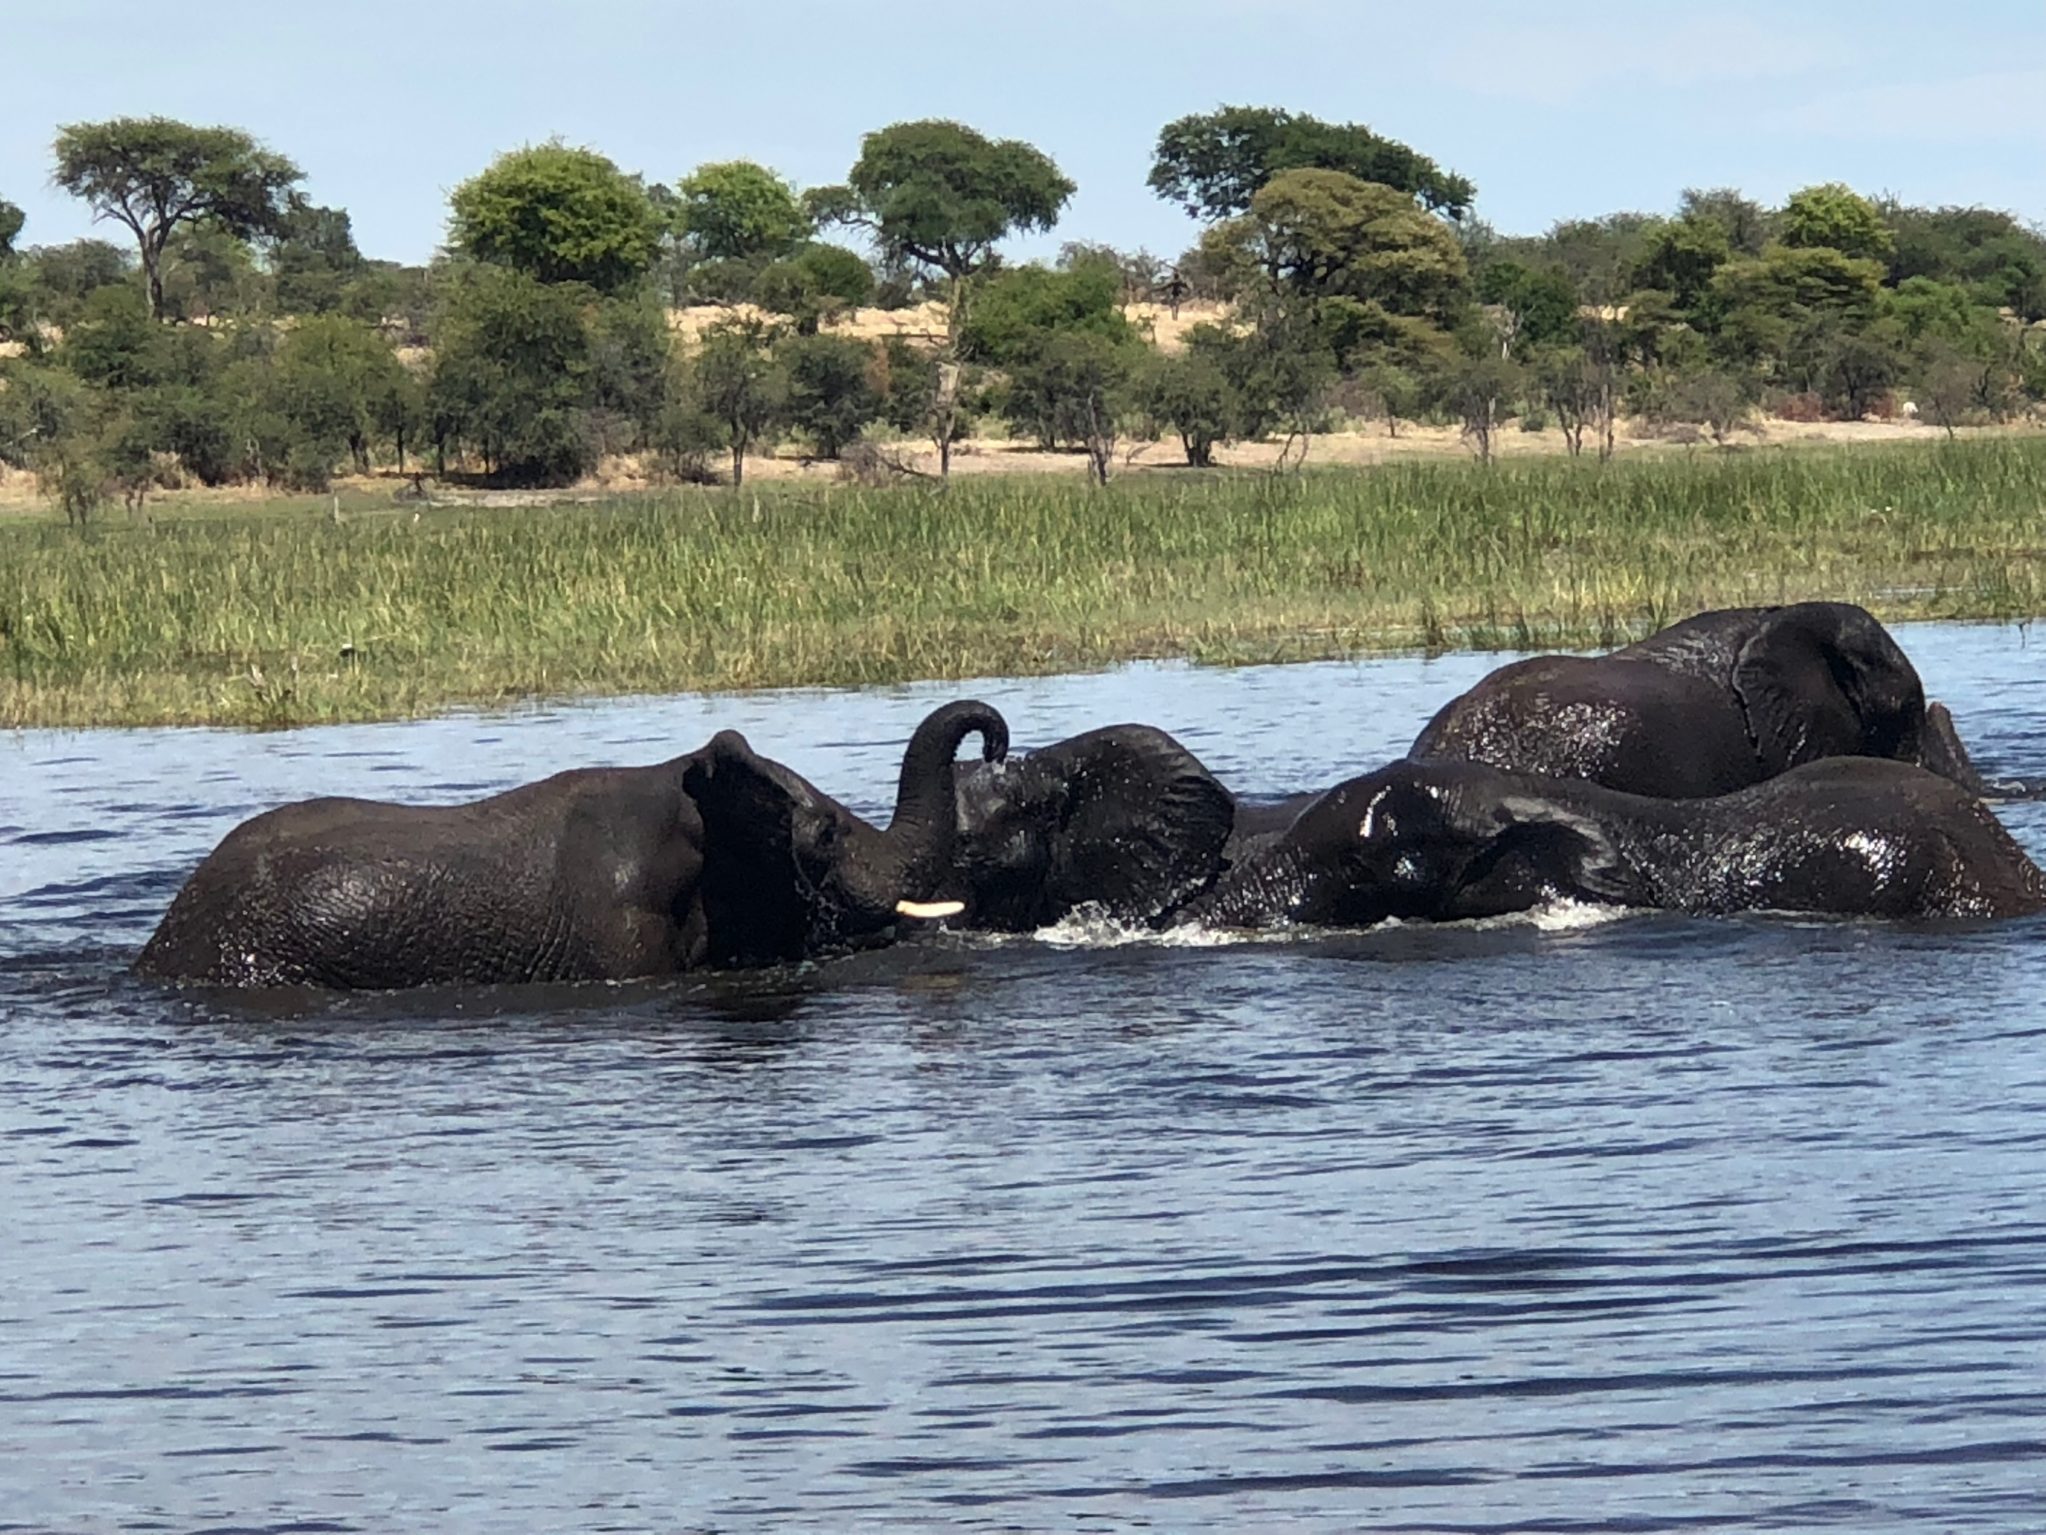 Elephants in the Boteti River Botswana by Danica Wilson